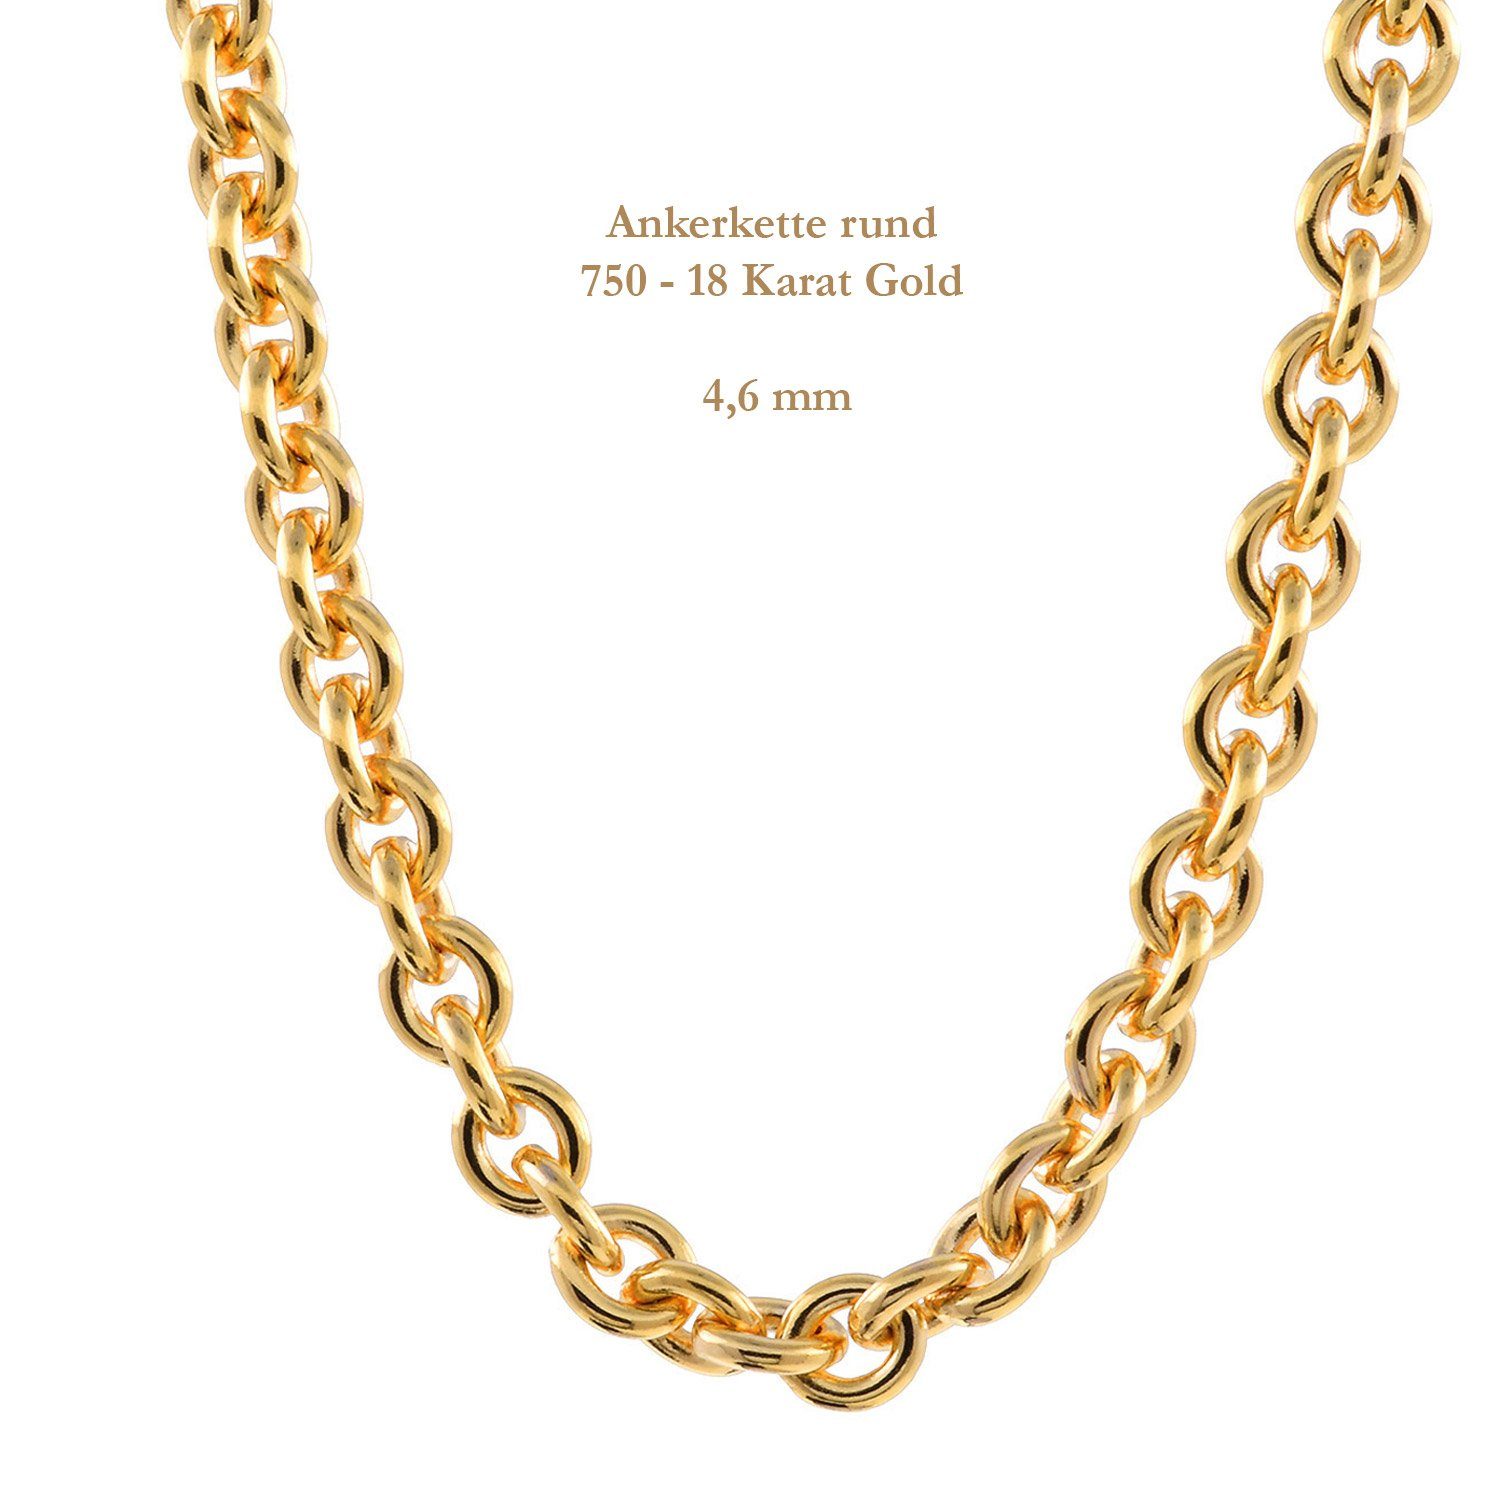 HOPLO Goldkette »Ankerkette 750 - 18 Karat Gold 4,6 mm Kettenlänge 50 cm«  (inkl. Schmuckbox), Made in Germany online kaufen | OTTO